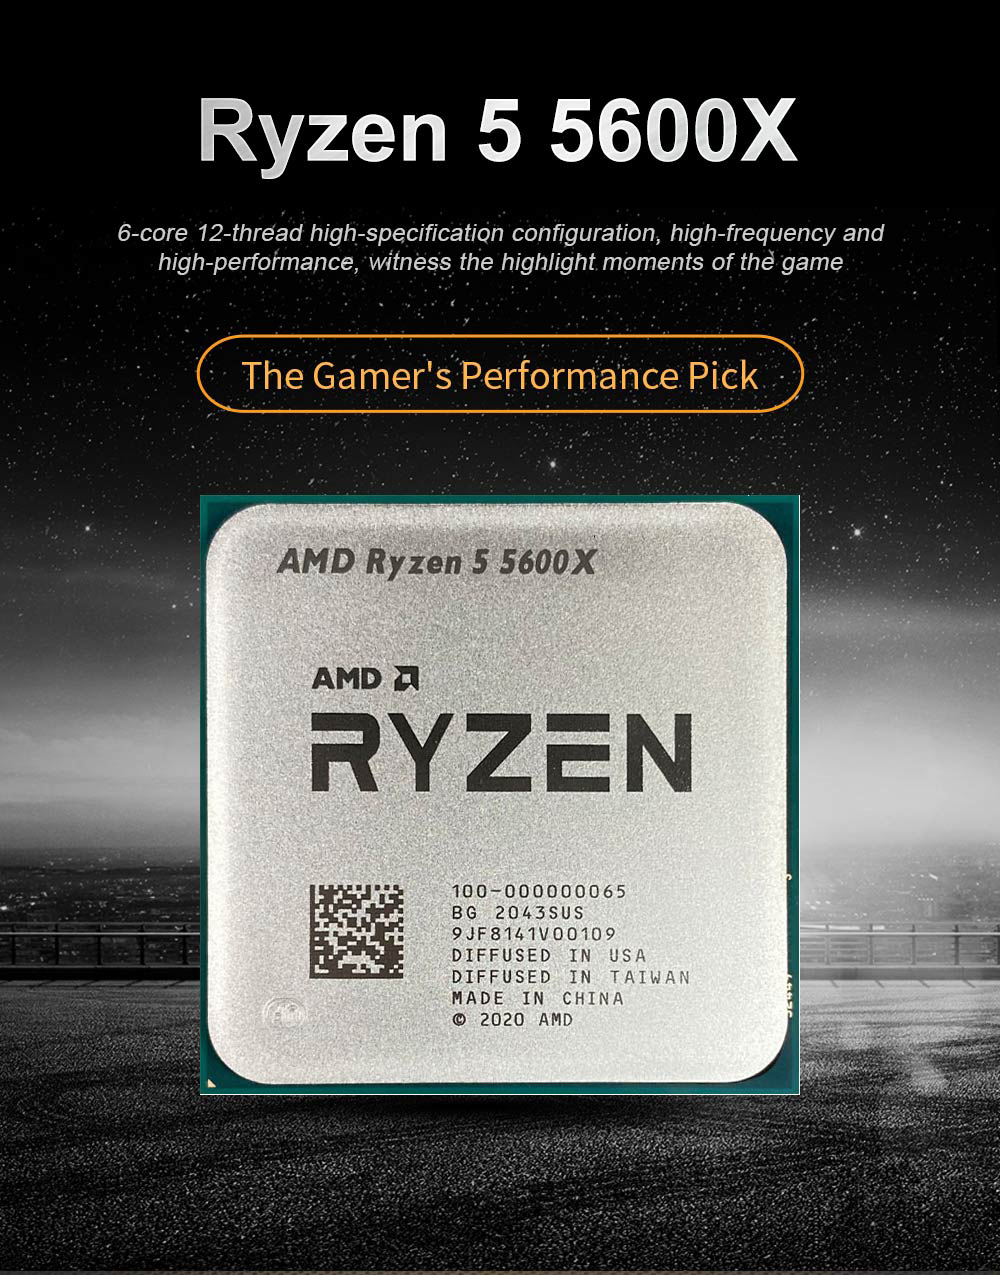 BIOSTAR nuova scheda madre da gioco B450MH + AMD Ryzen 5 5600X R5 5600X processore CPU gioco 32G AM4 DDR4 Kit scheda madre placa mae